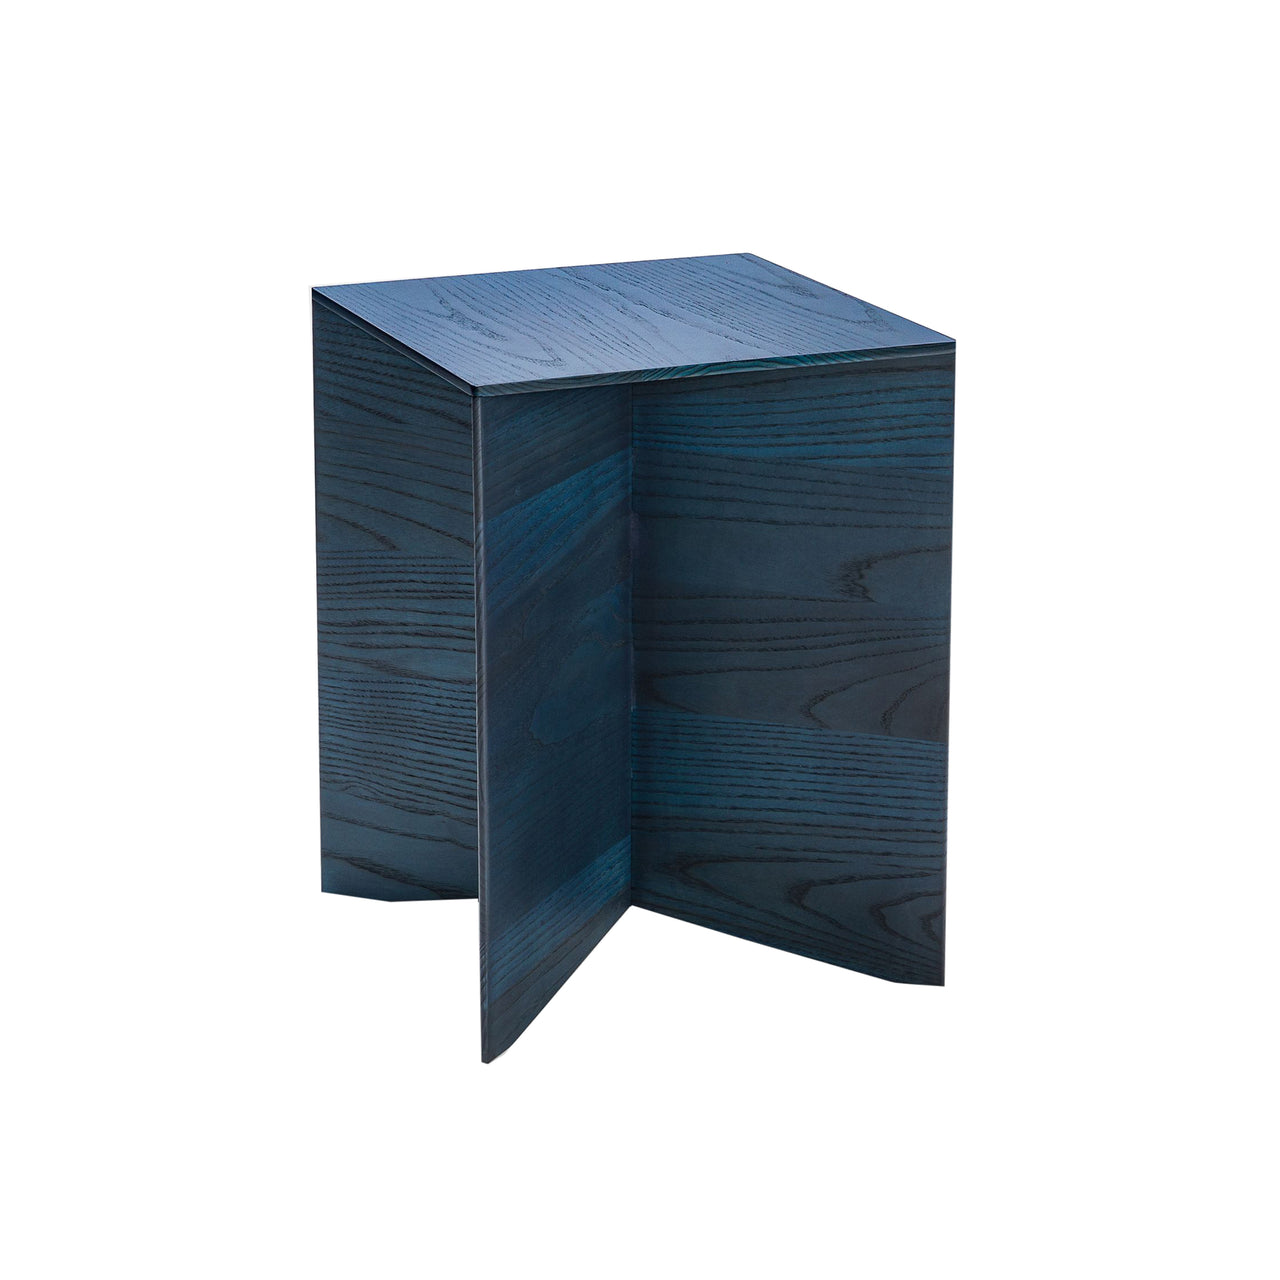 Paperwood Side Table: Indigo Ash